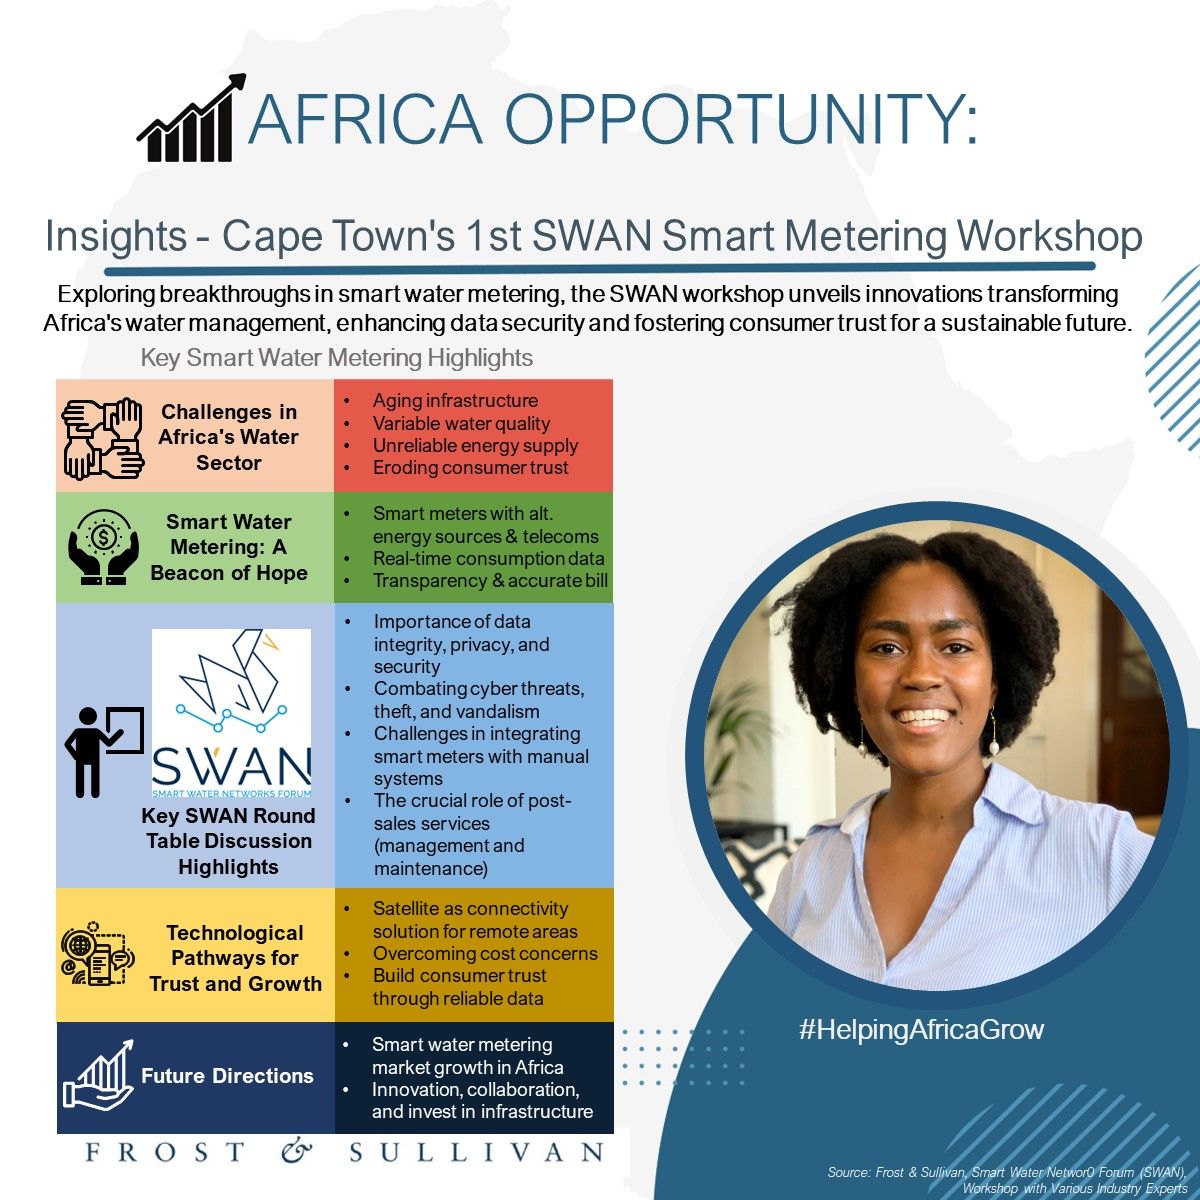 SWAN Workshop Highlights